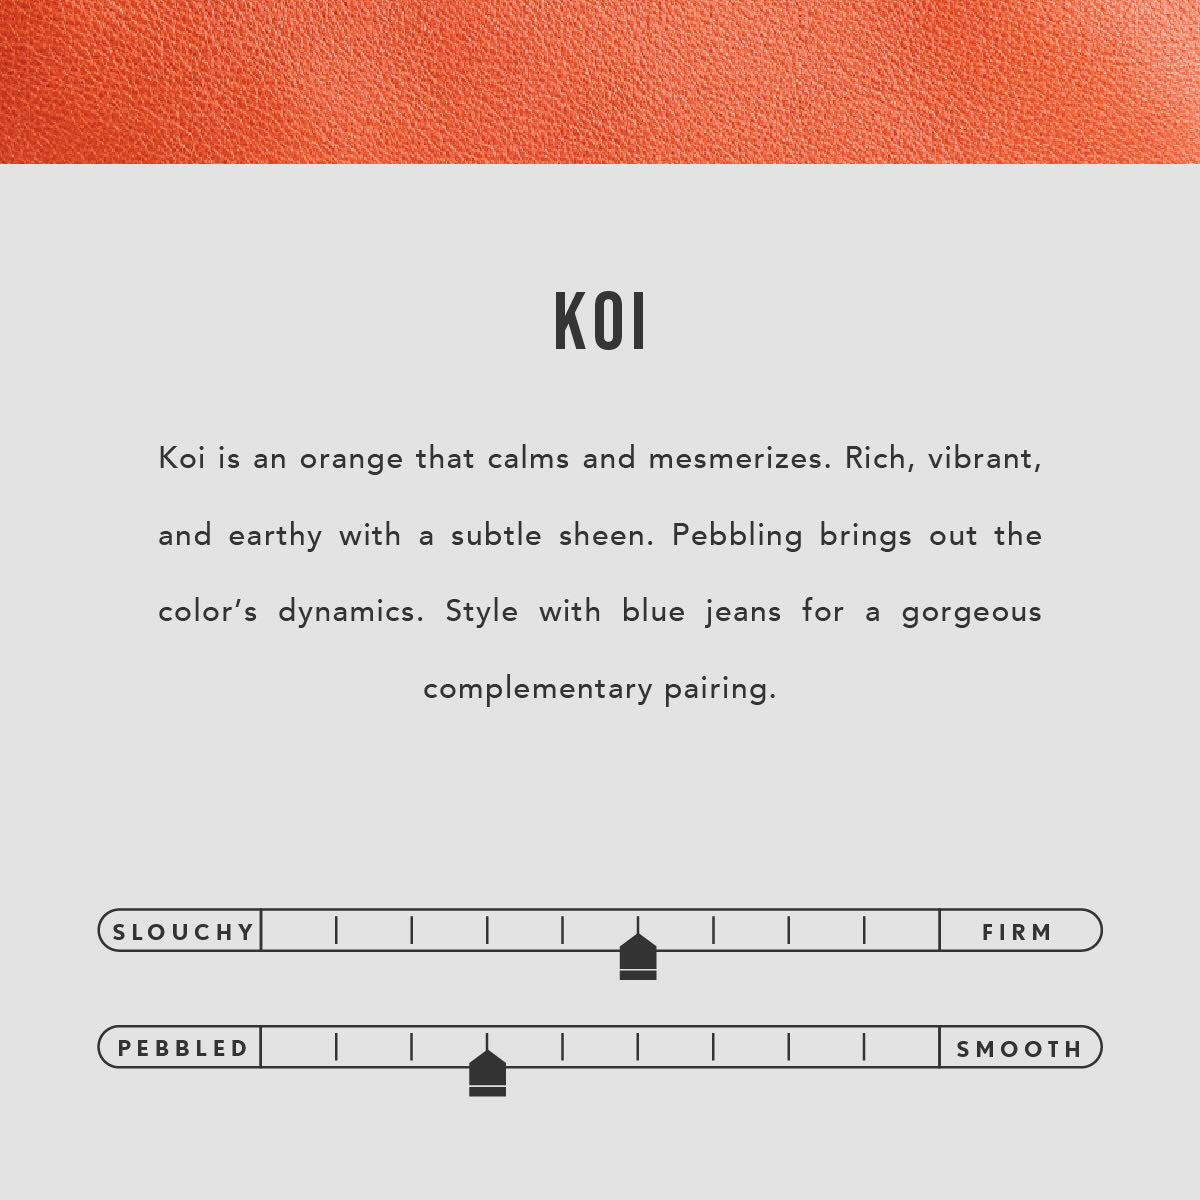 Koi | infographic